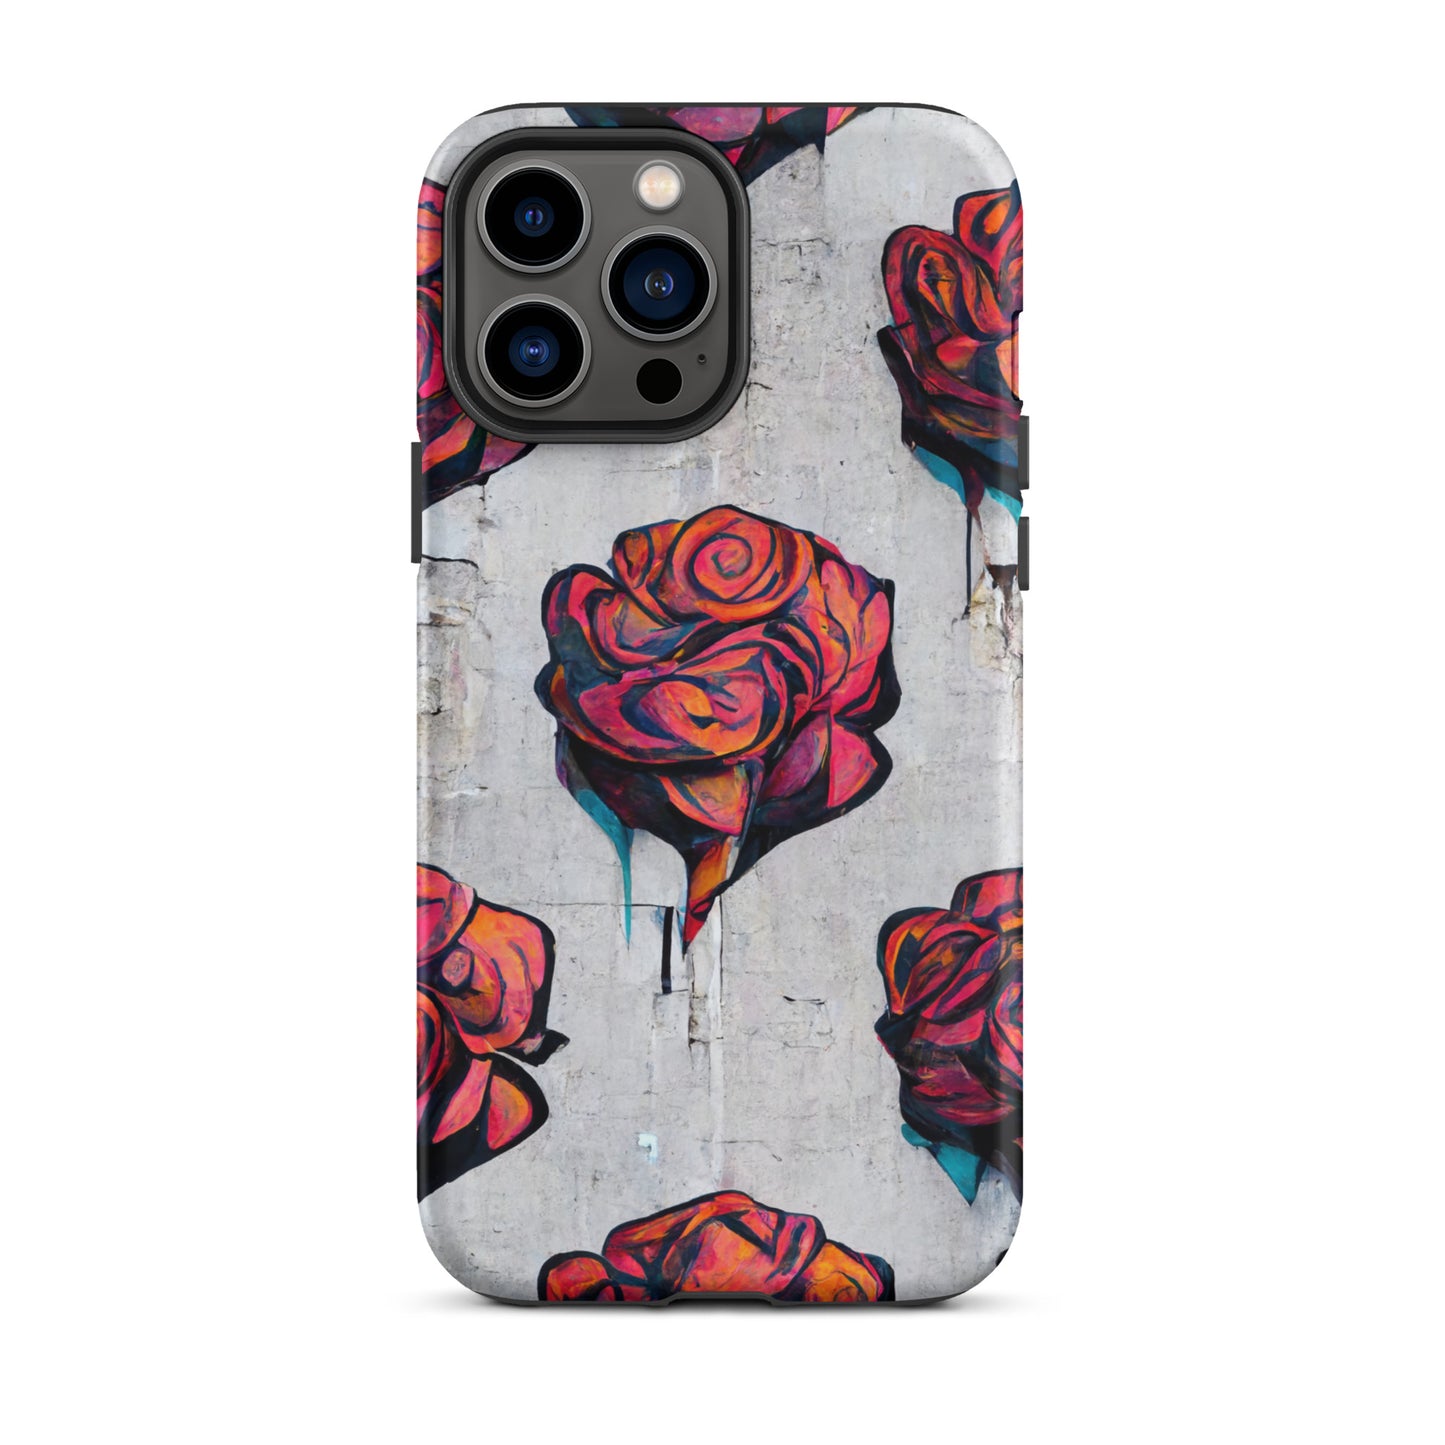 Neduz Designs Artified Graffiti Roses Tough iPhone kılıfı